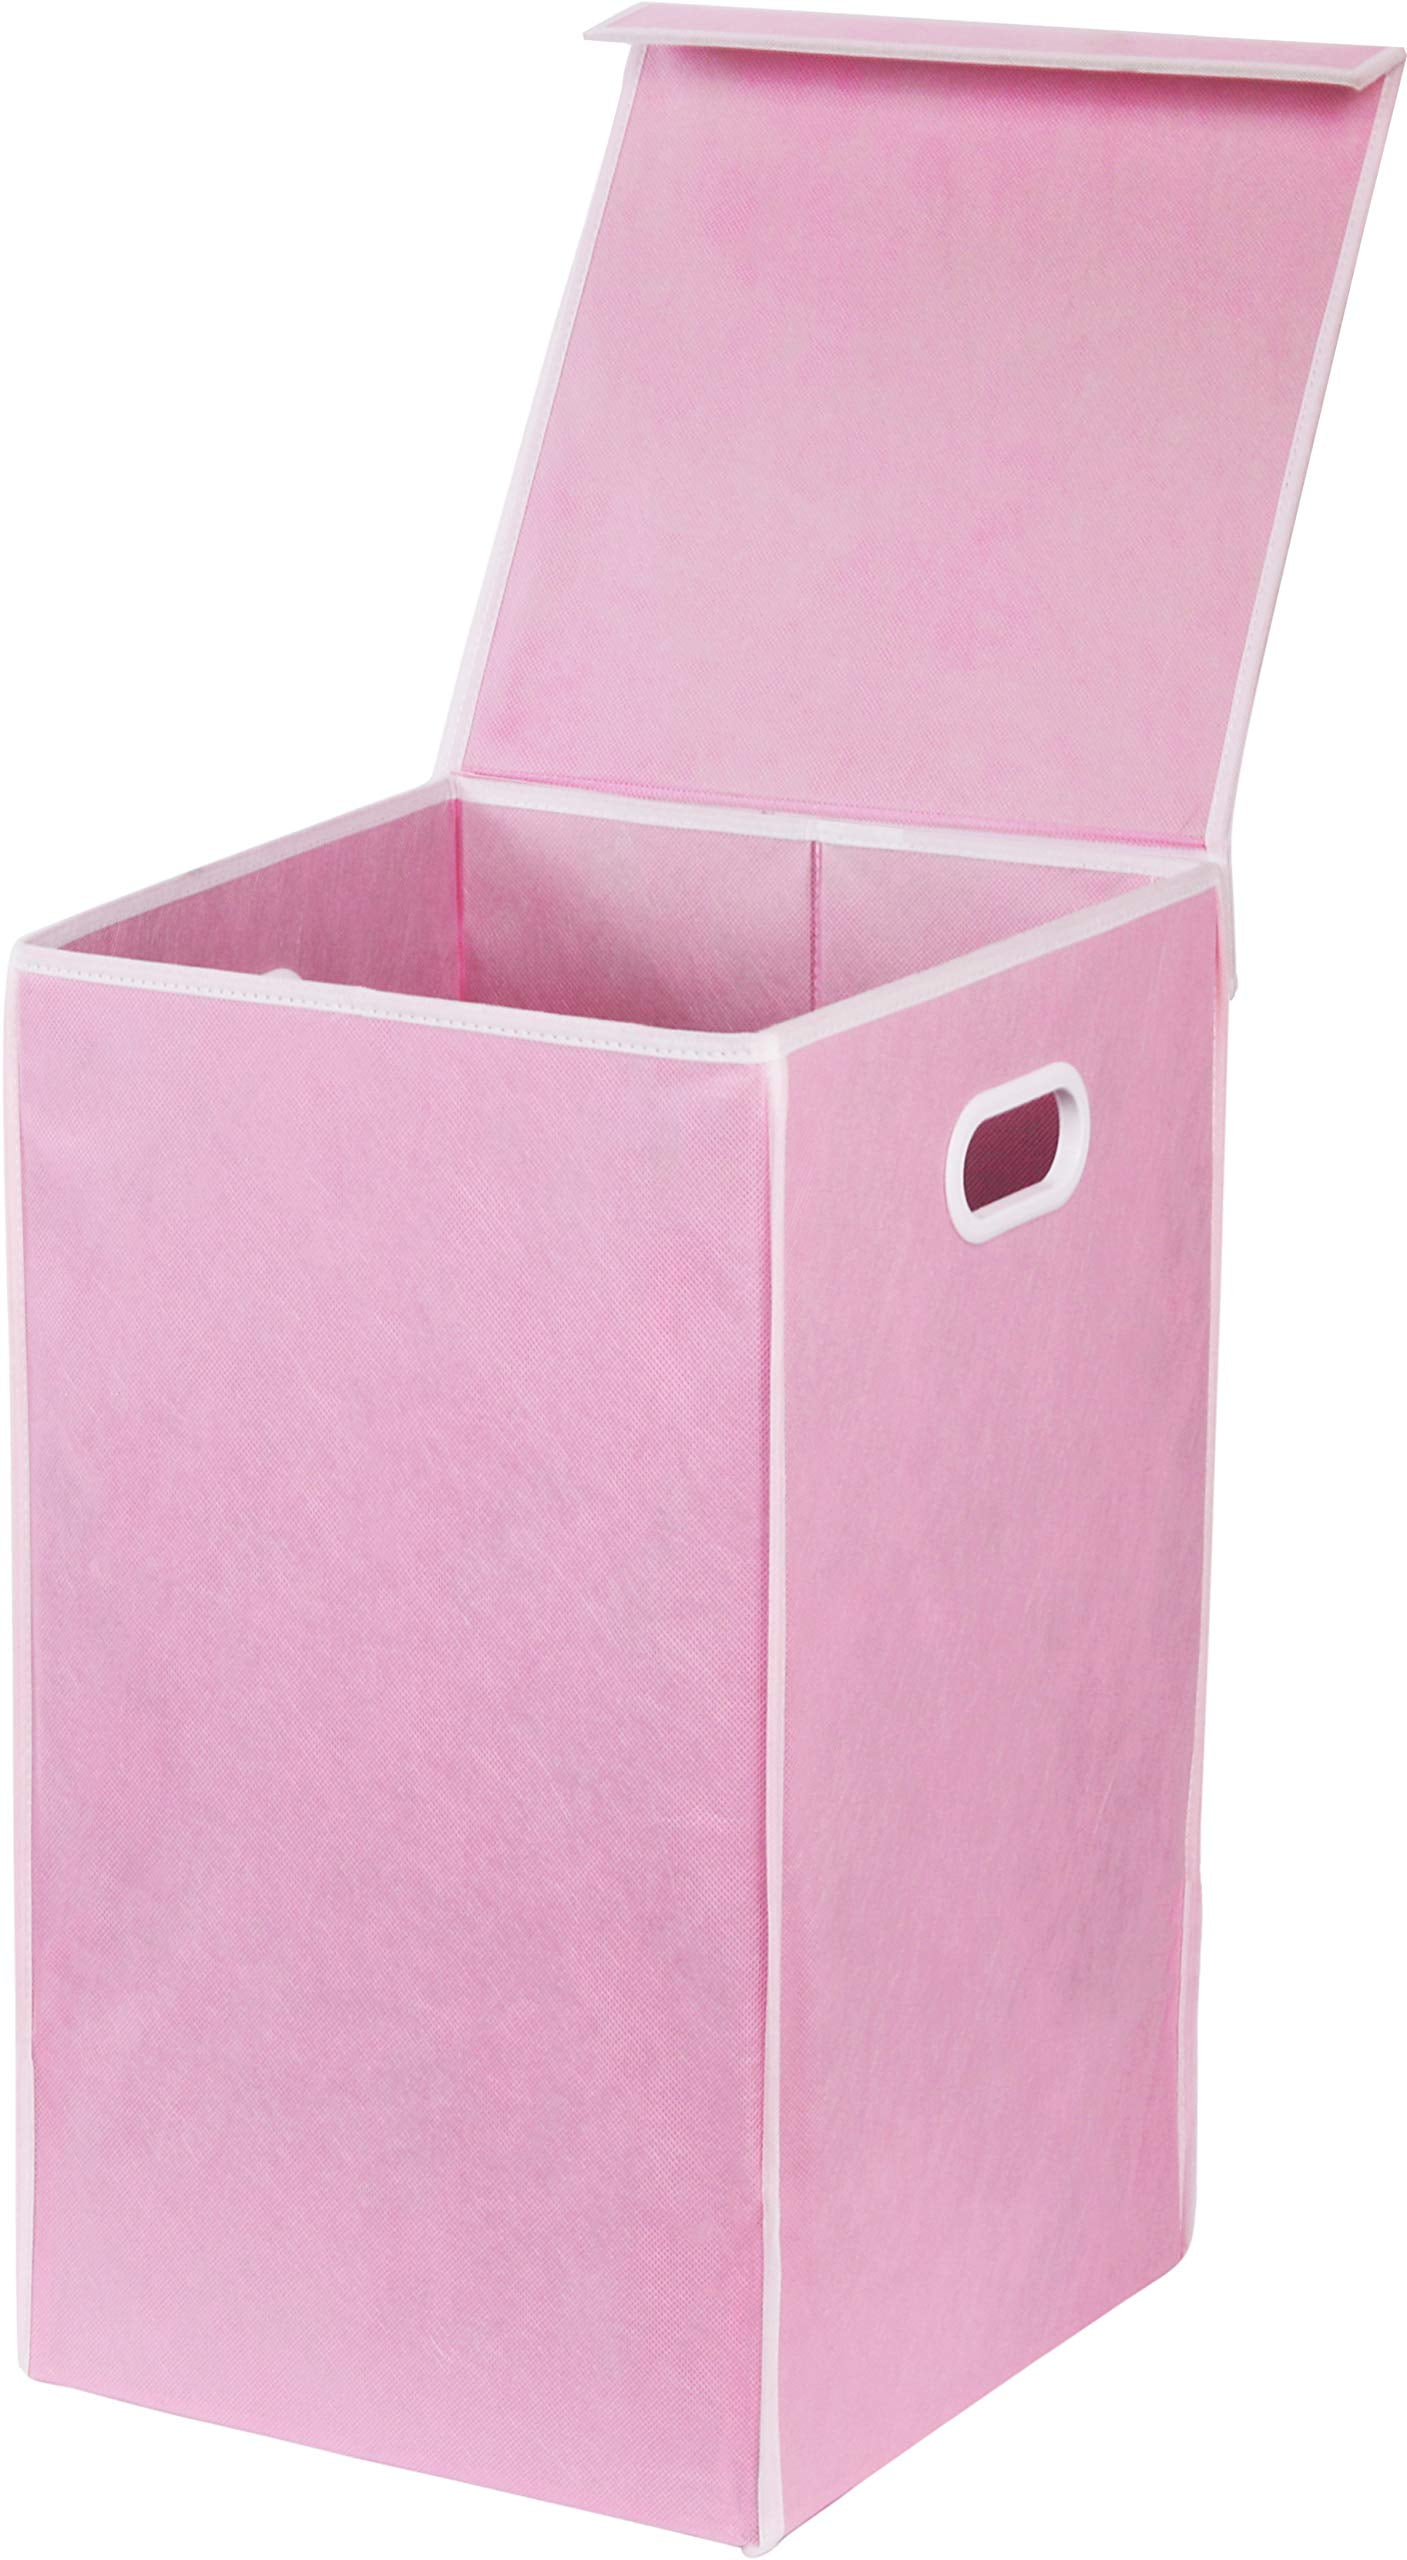 02 pieces - pink/pink foldable storage box foldable laundry basket COM-FOUR® 2x Pop-Up laundry box 